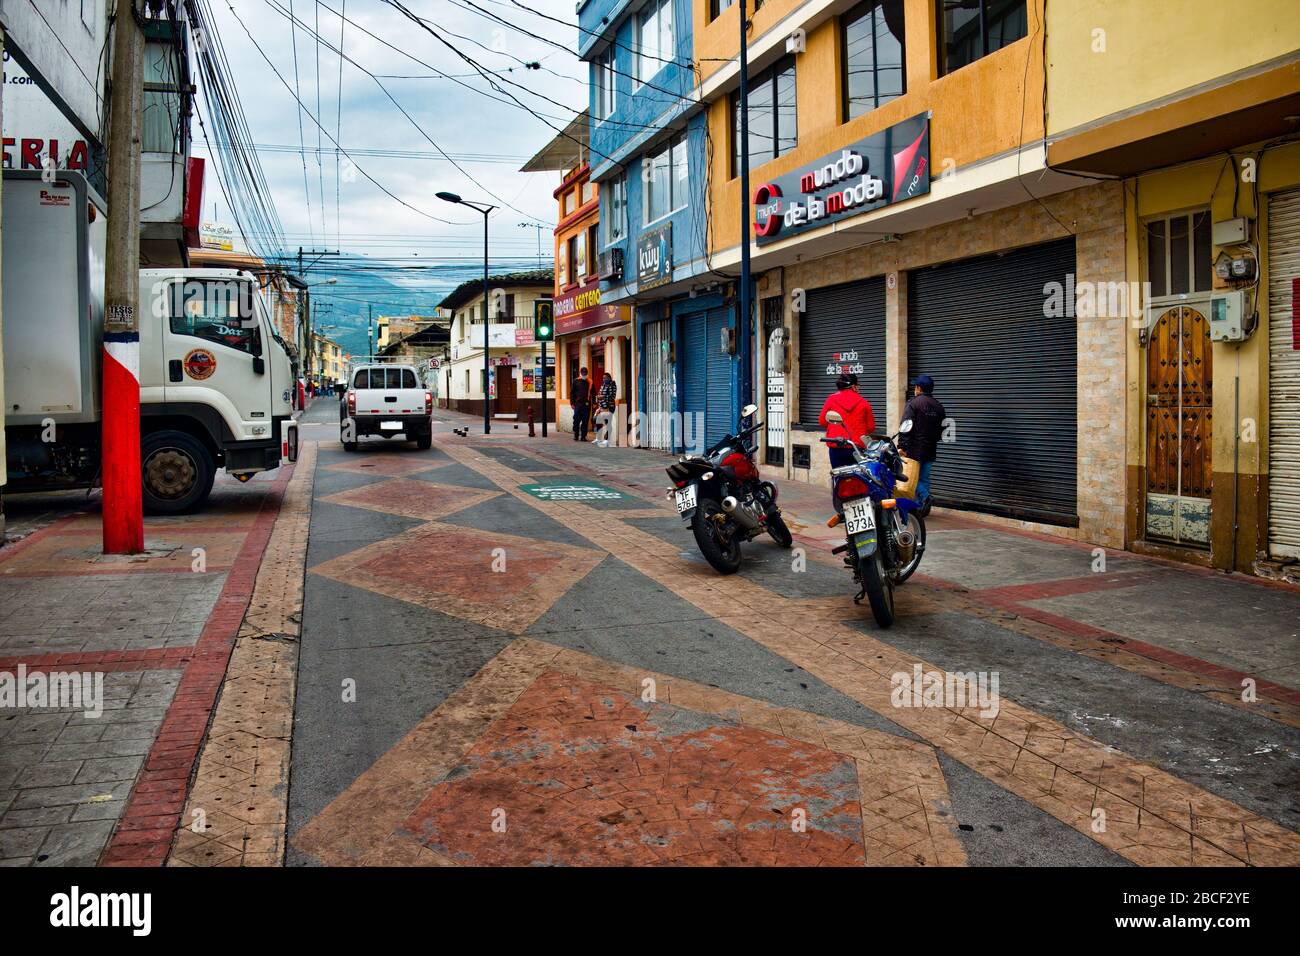 Coronavirus Cotacachi trip 6of11: empty brick-paved street shuttered shops Andes range in background village canton or pueblo in Ecuador S. America Stock Photo